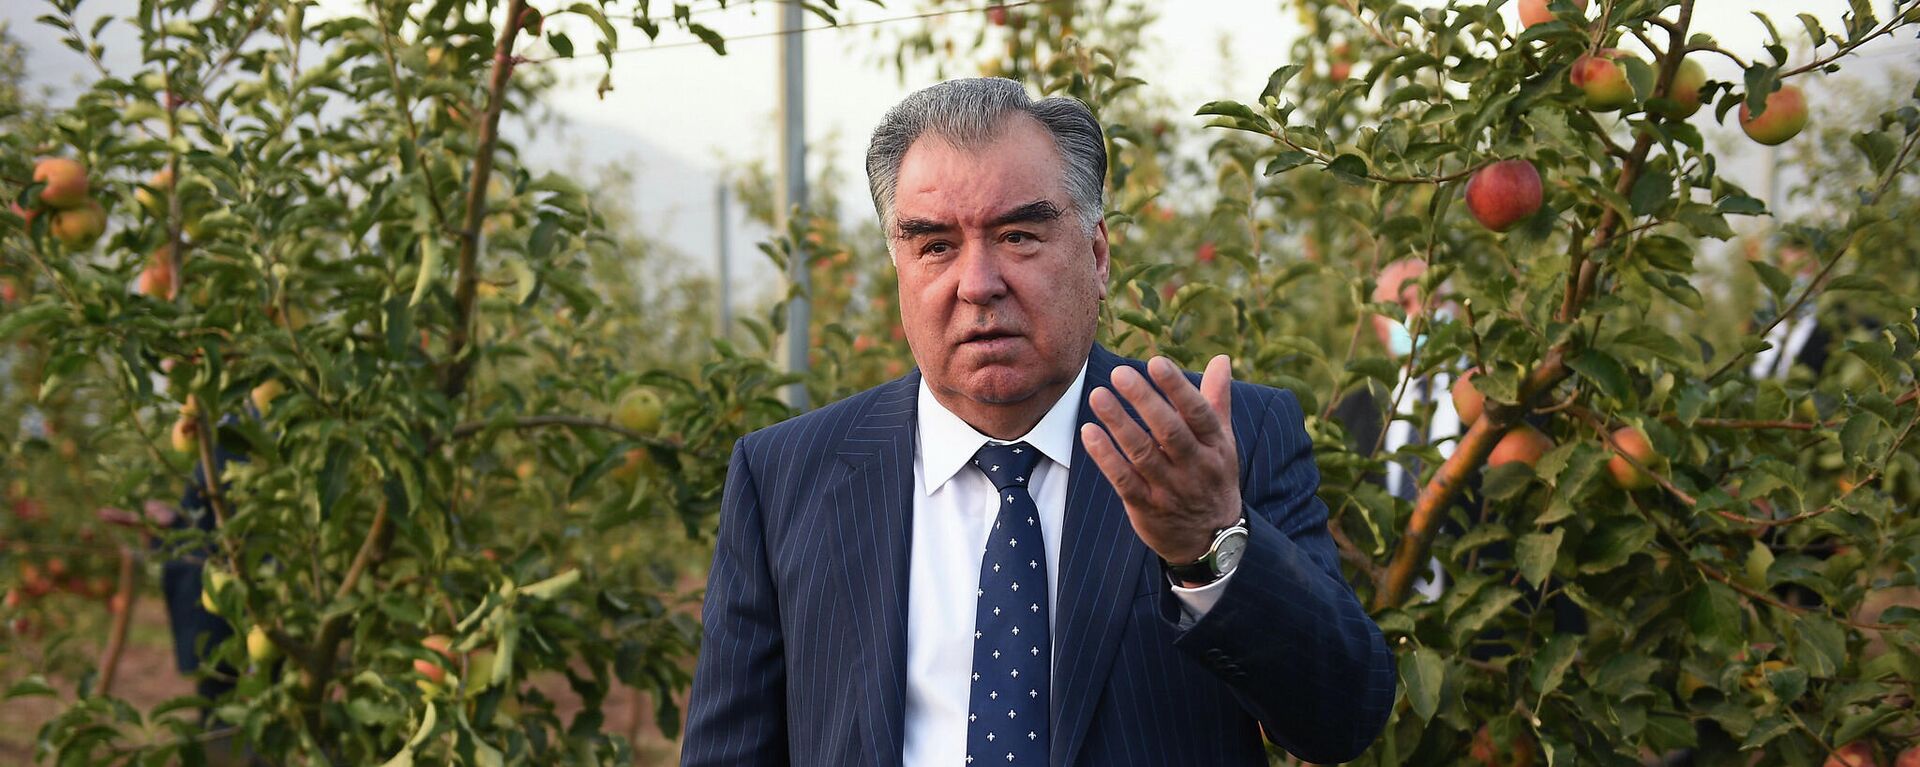 Президент Республики Таджикистан Эмомали Рахмон - Sputnik Таджикистан, 1920, 15.10.2021